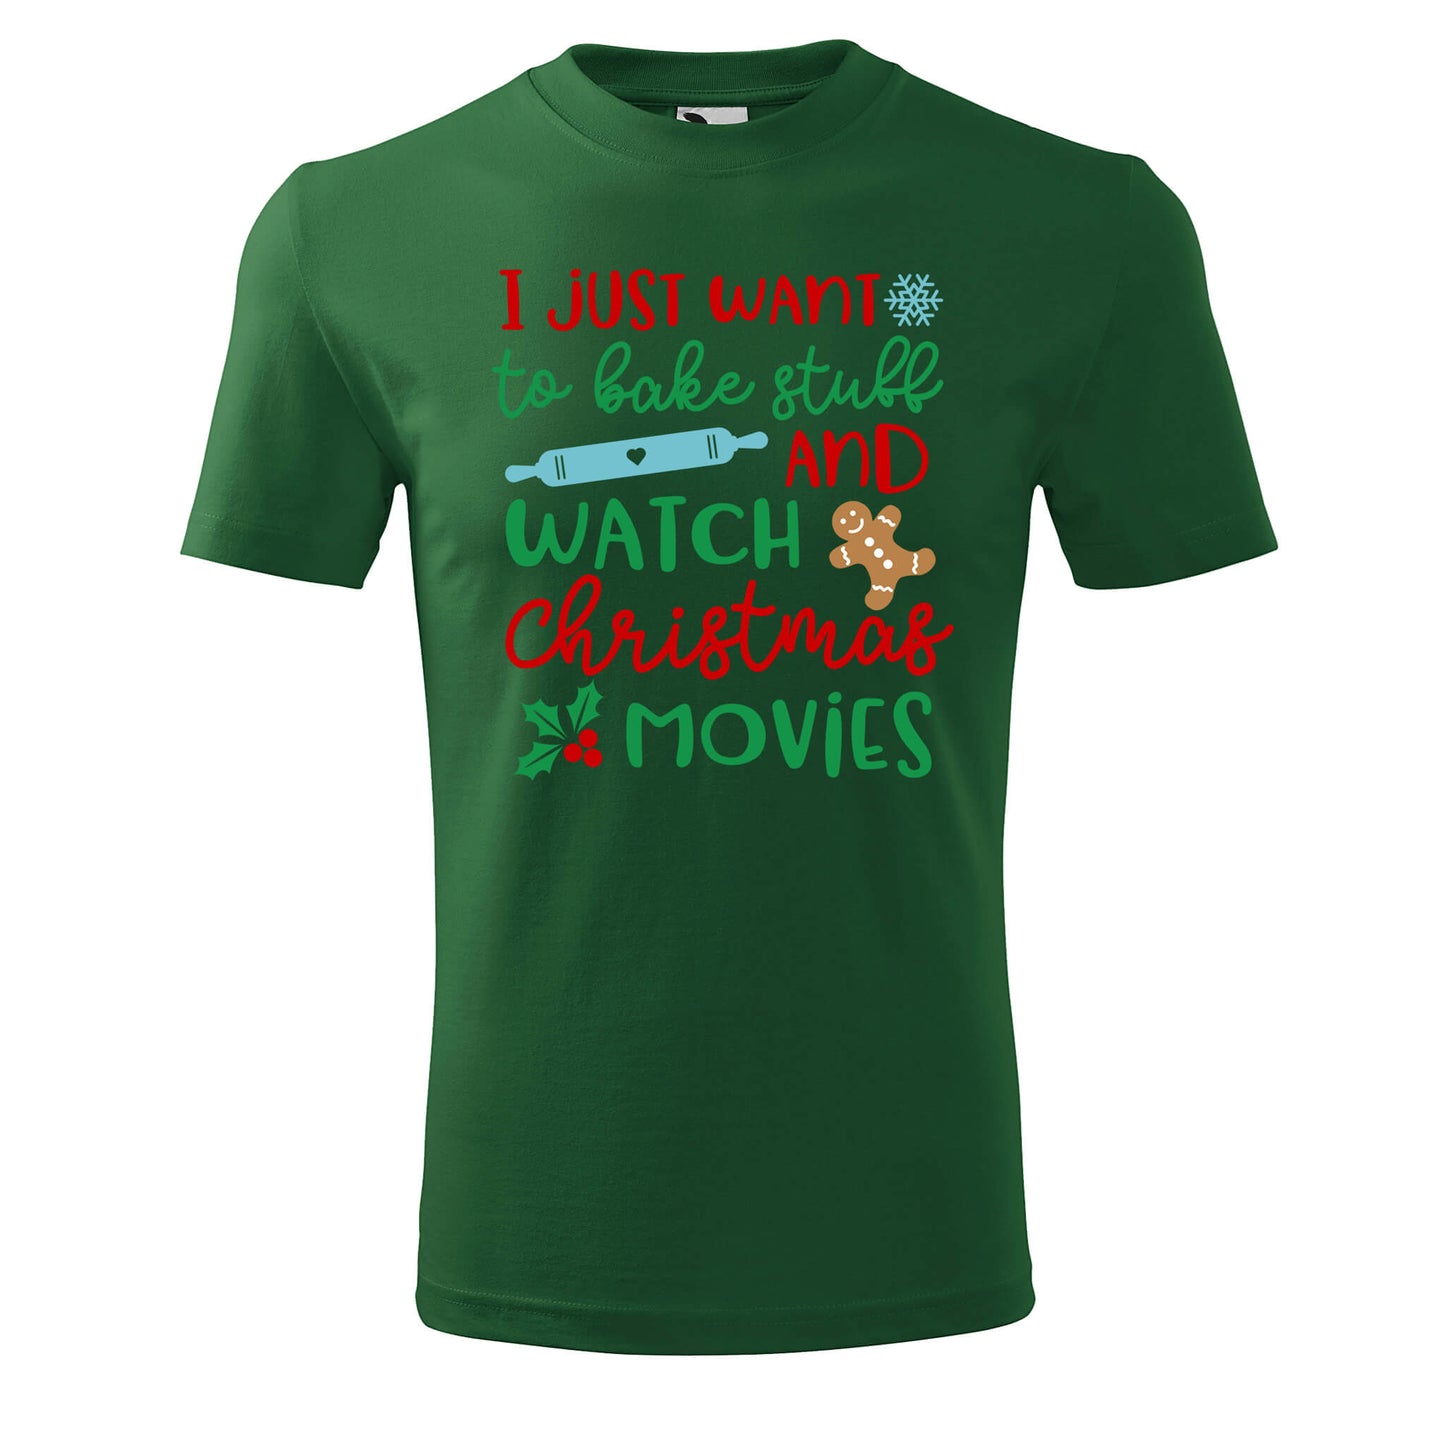 Bake stuff watch christmas movies t-shirt - rvdesignprint